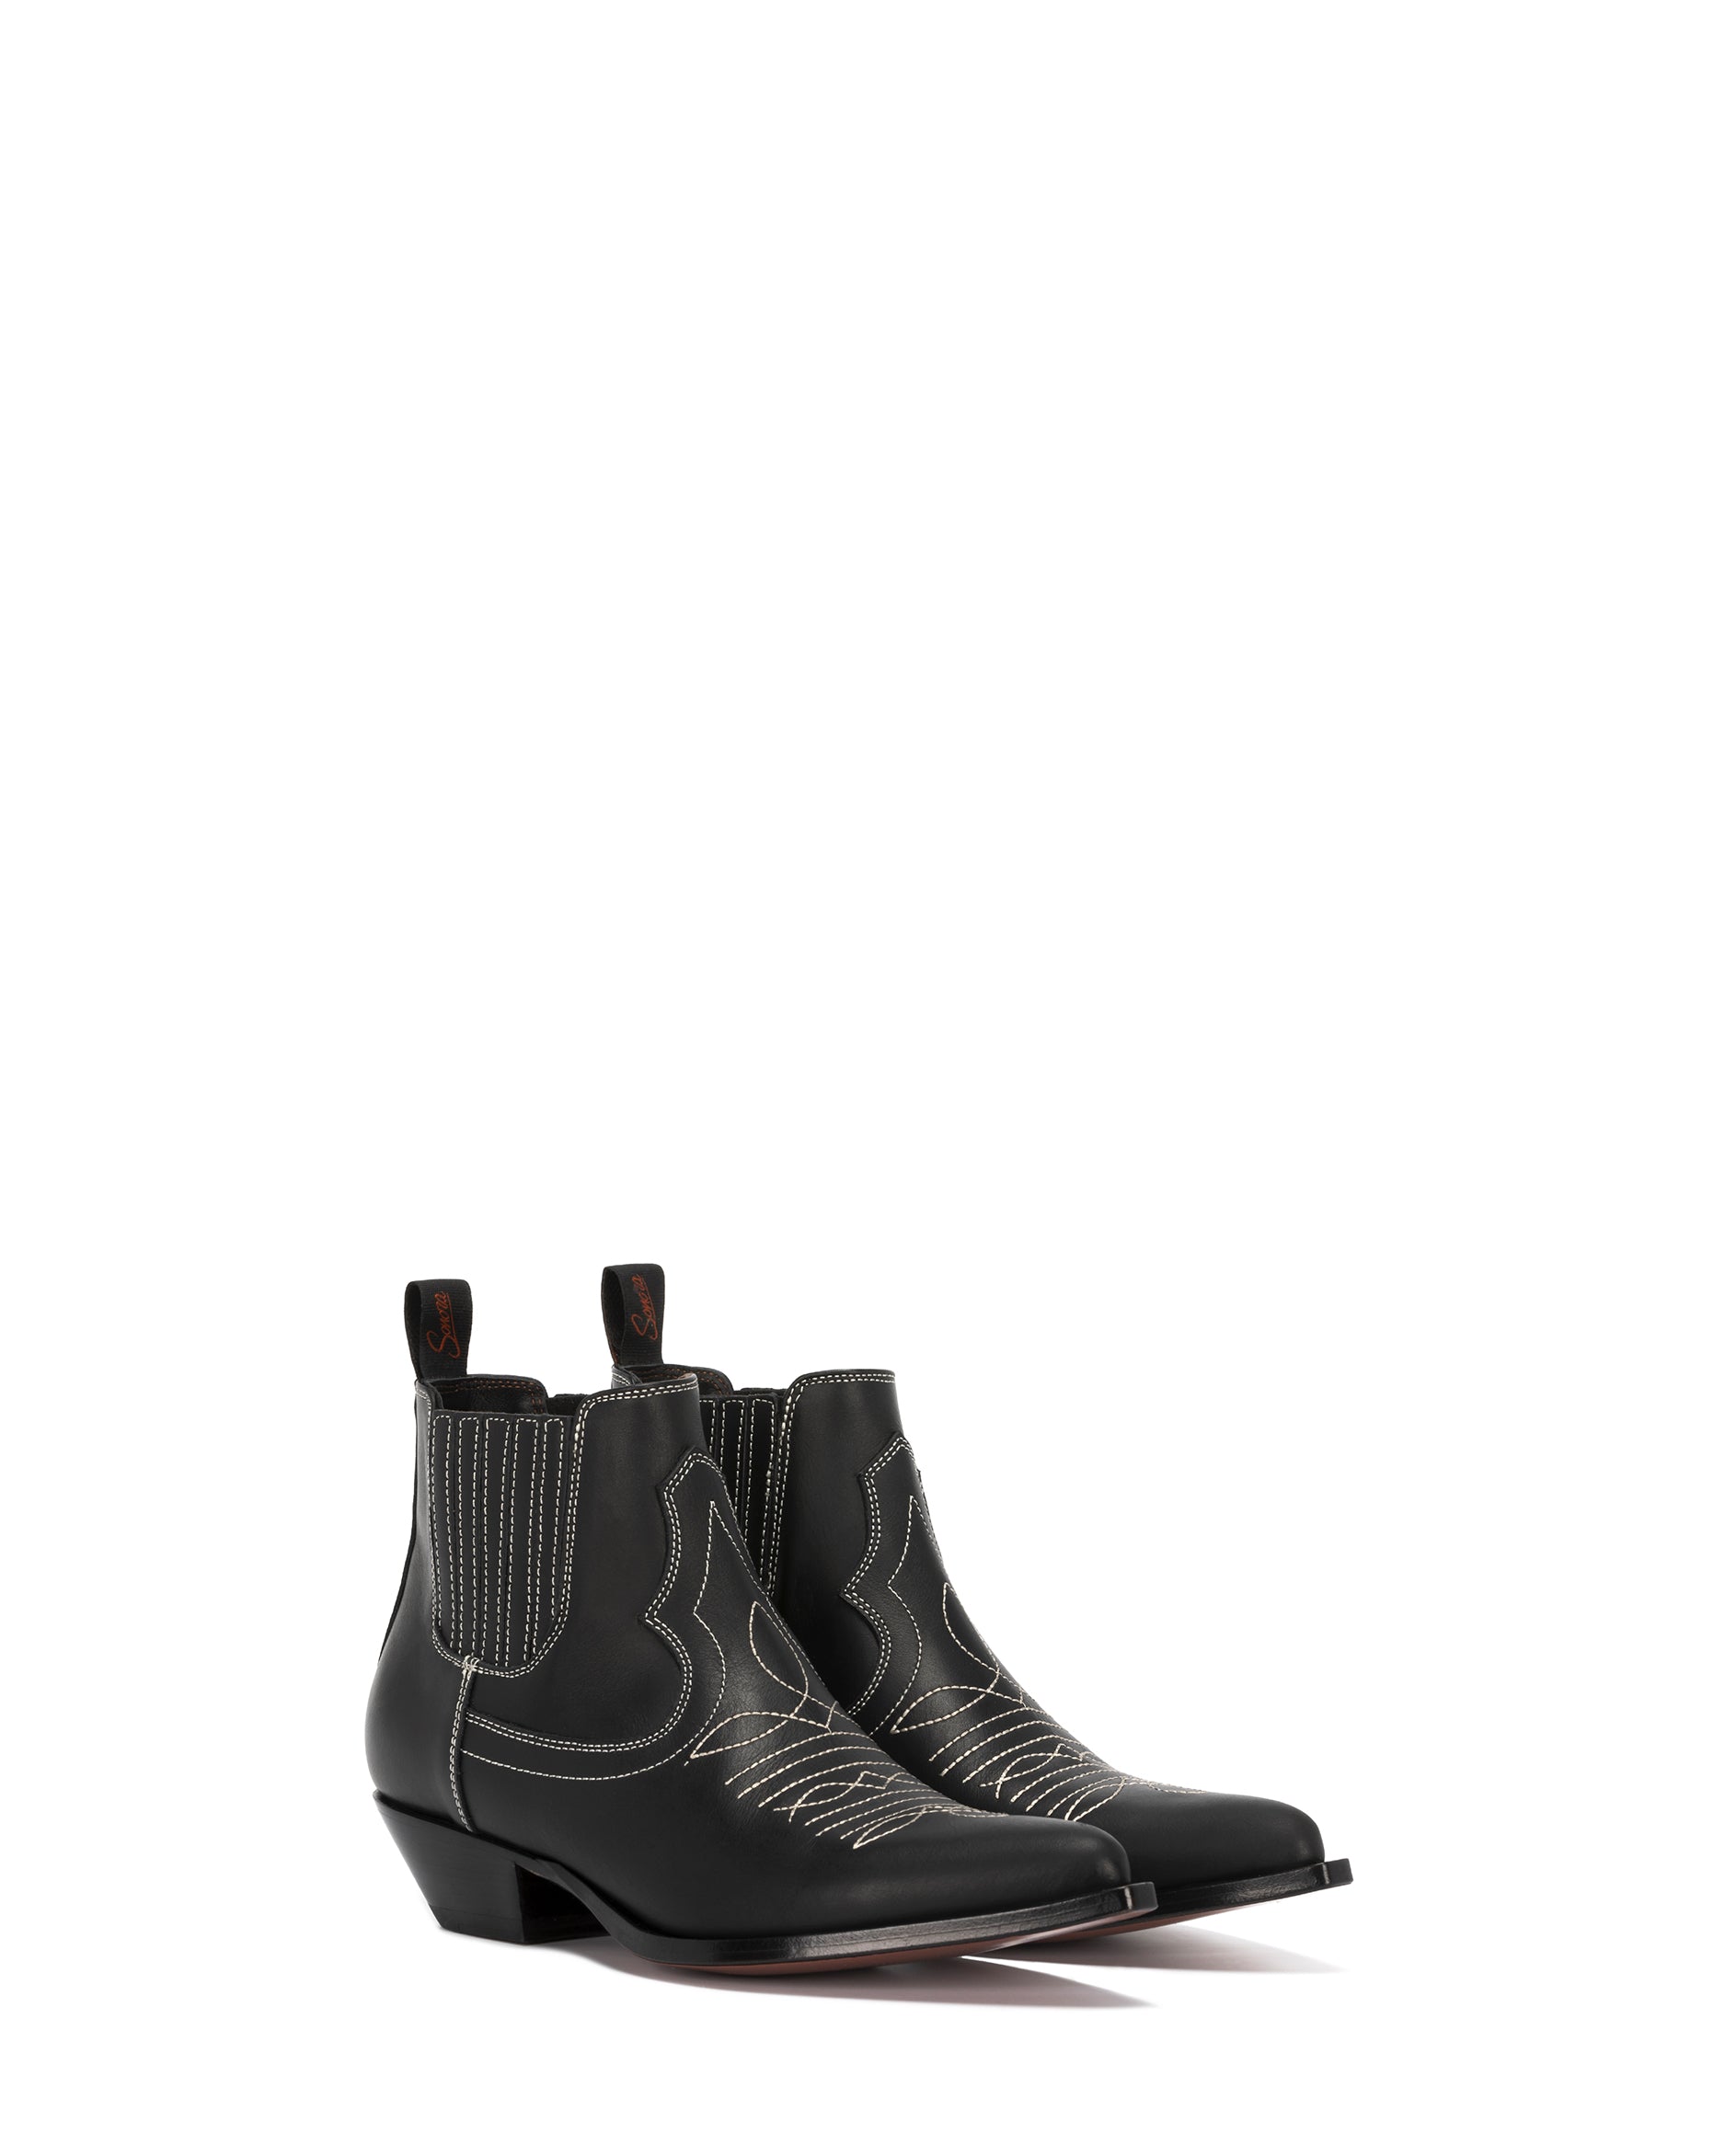 HIDALGO Women's Ankle Boots in Black Calfskin | Ecru Embroidery_02